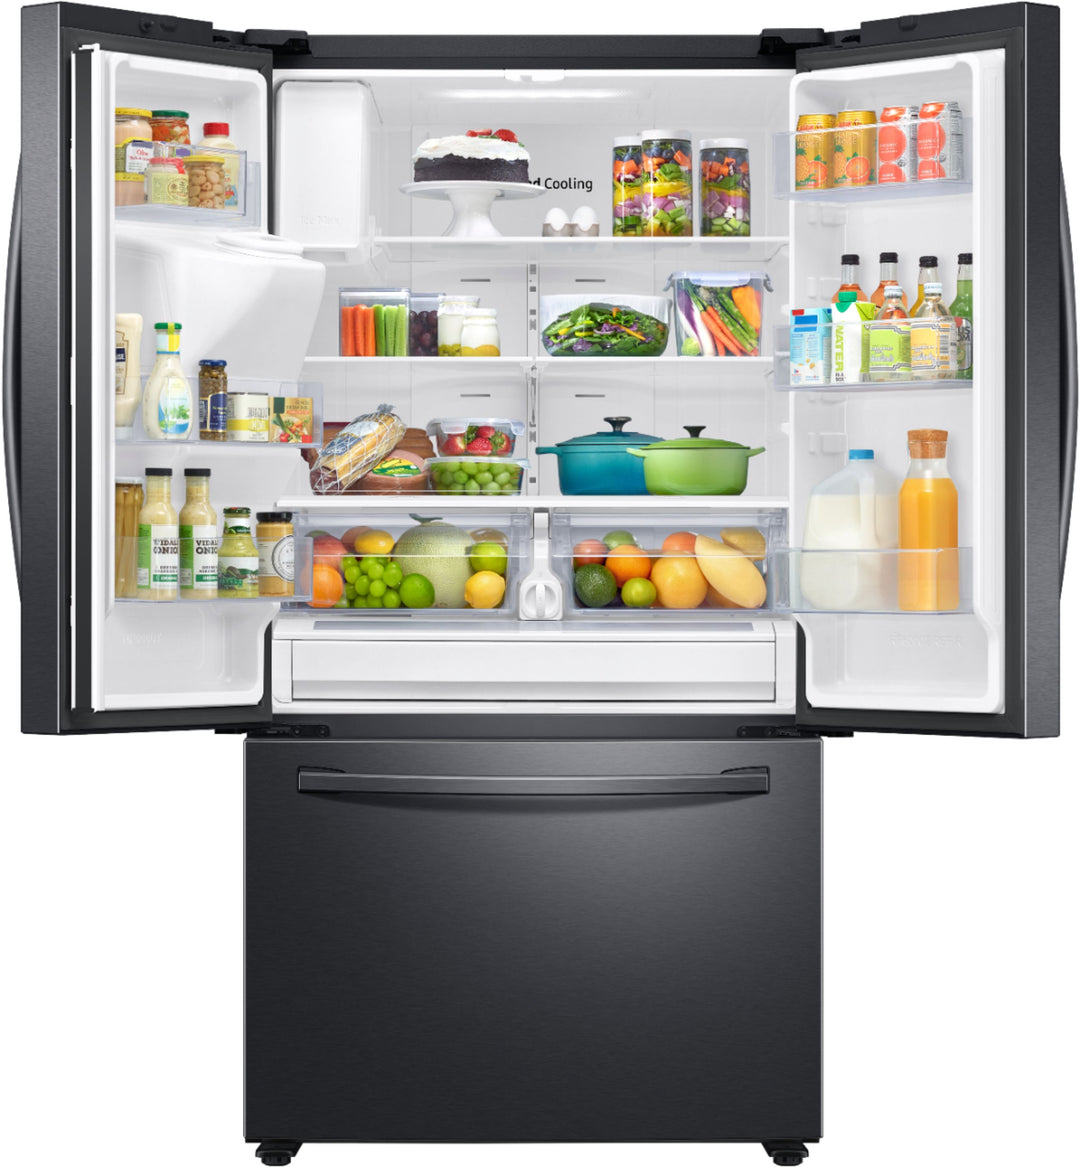 Samsung - 27 cu. ft. Large Capacity 3-Door French Door Refrigerator with External Water & Ice Dispenser - Black stainless steel_11